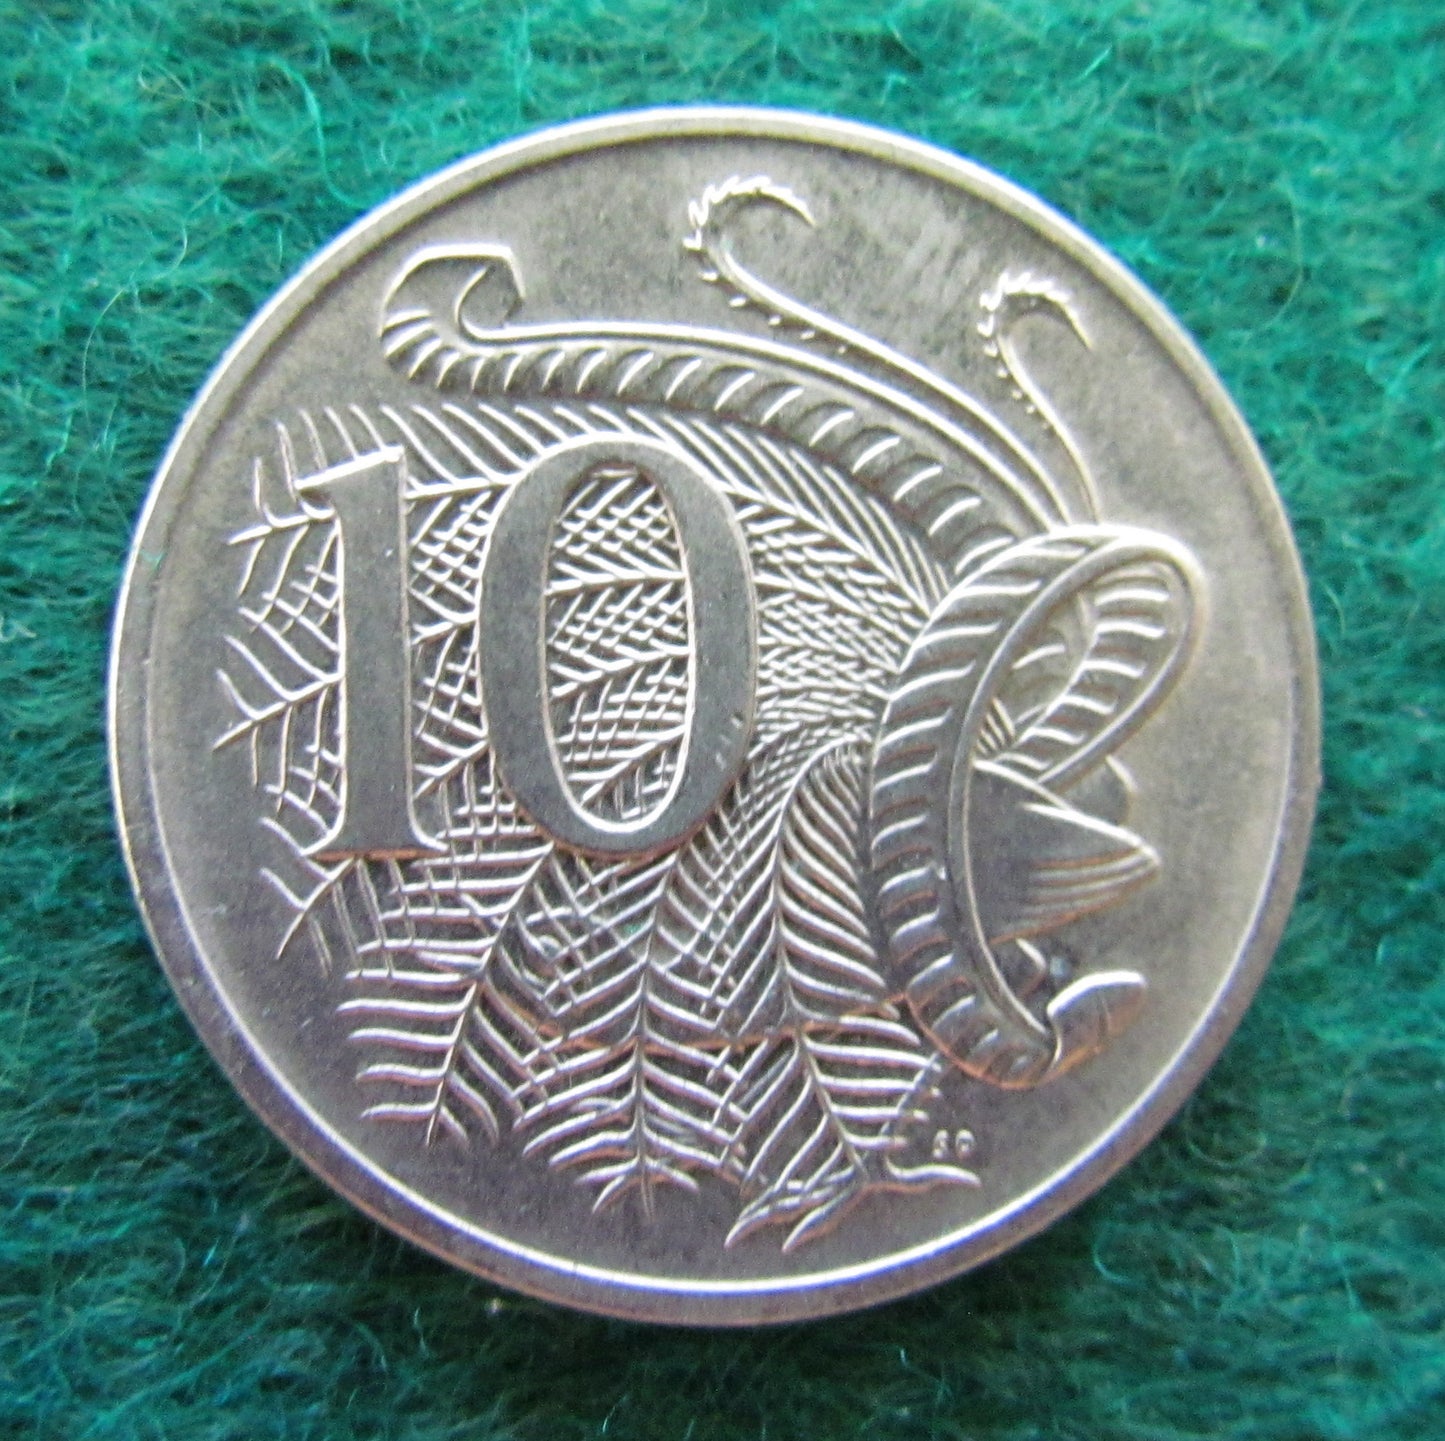 Australian 1983 10 Cent Queen Elizabeth II Coin - Circulated